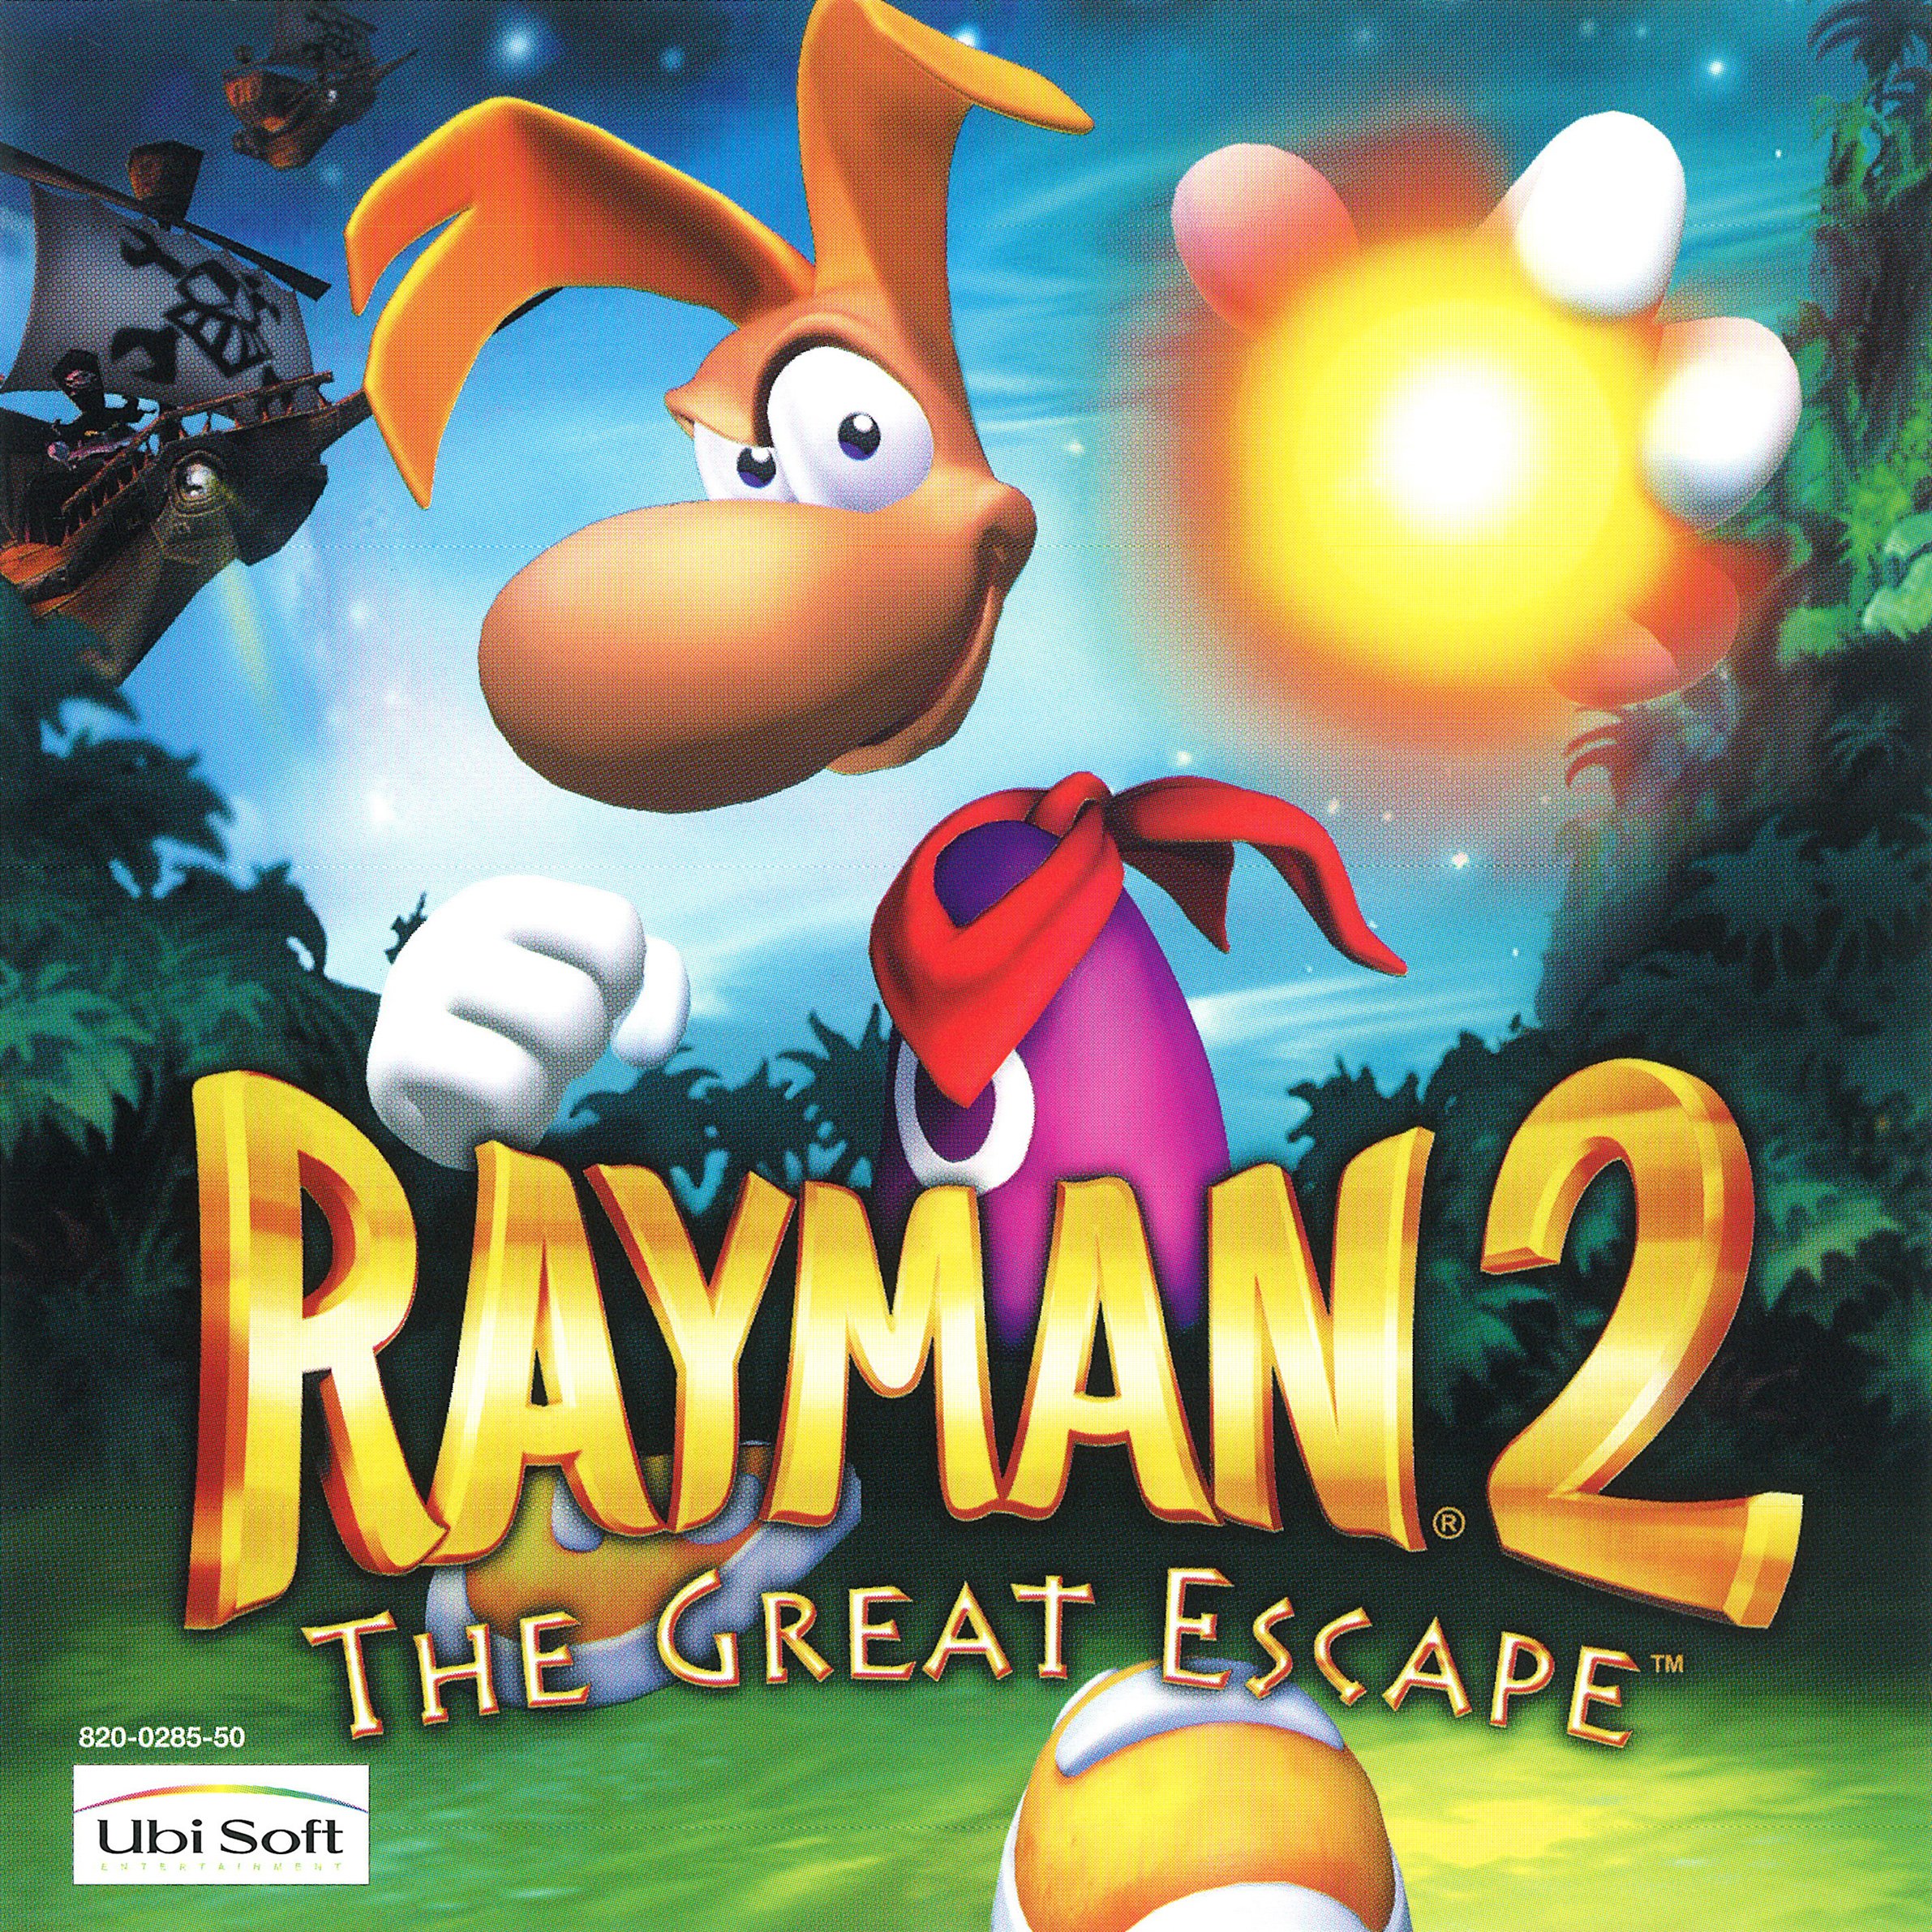 Rayman 2: The Great Escape — Eric Chevalier | Last.fm